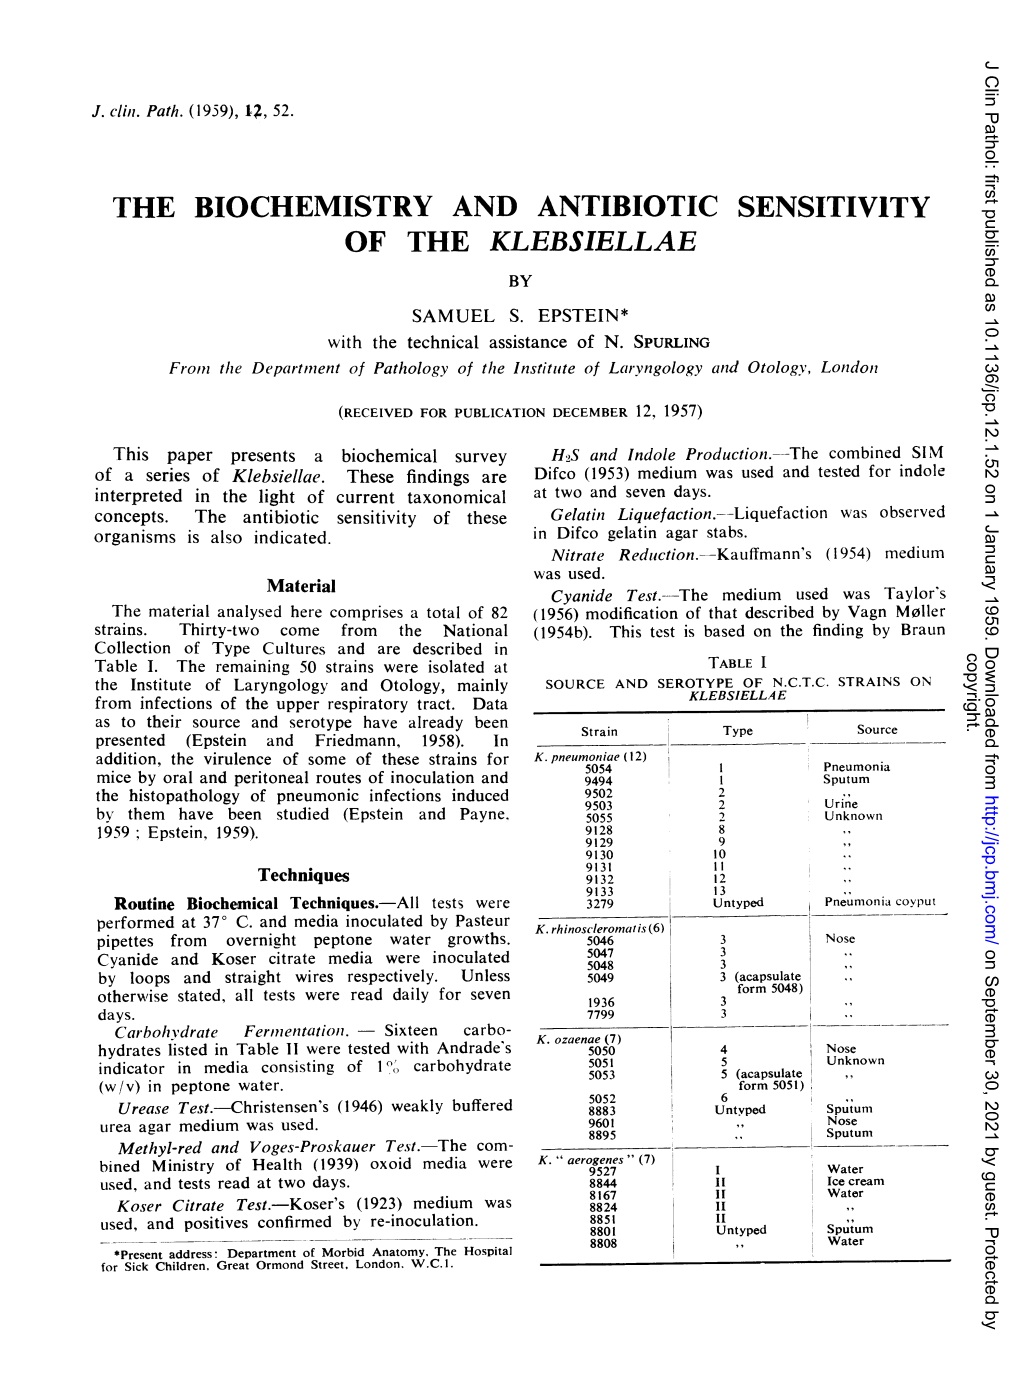 The Biochemistry and Antibiotic Sensitivity of the Klebsiellae by Samuel S